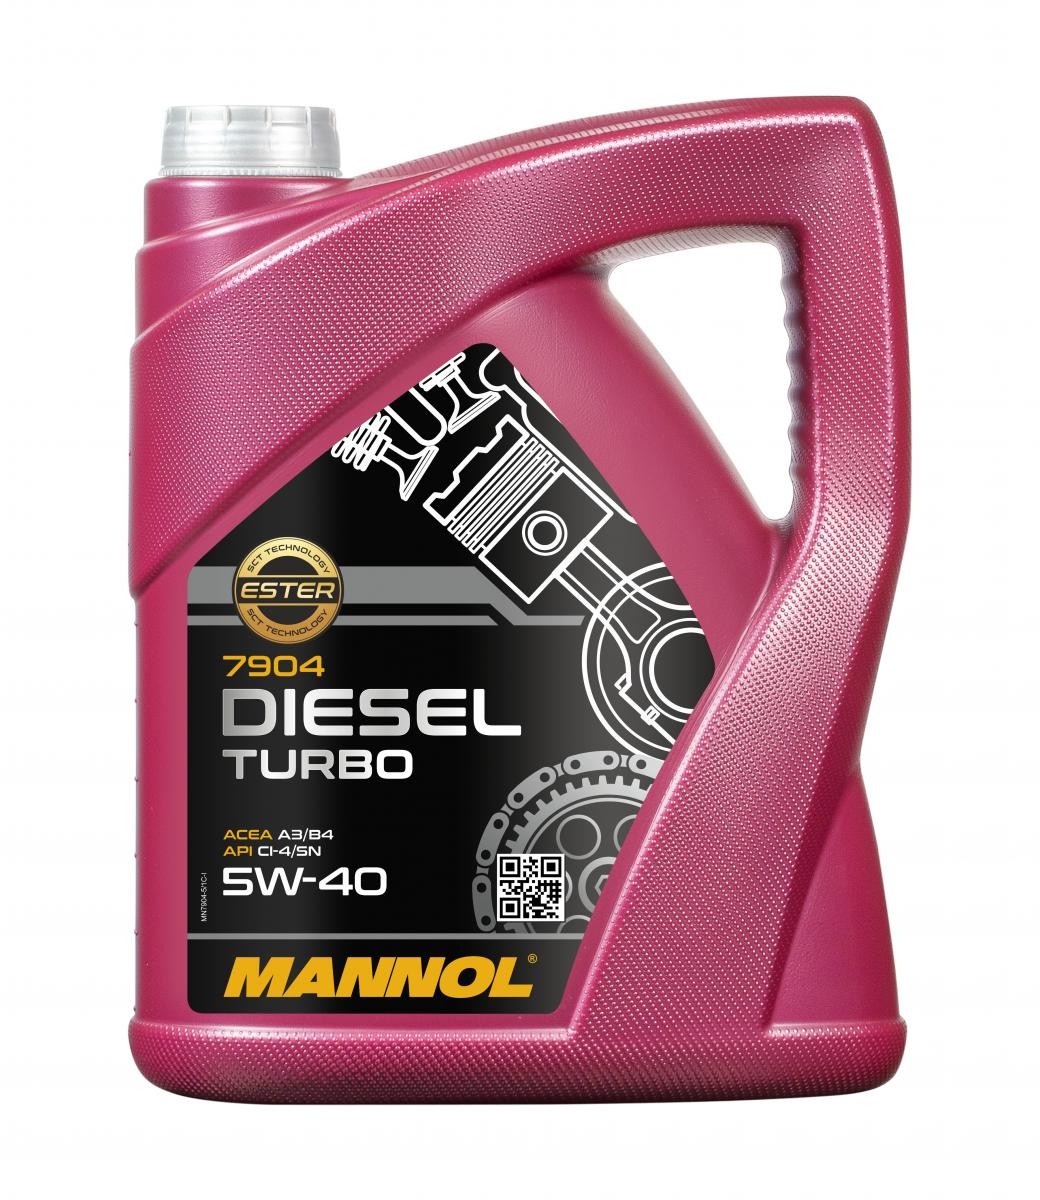 Car oil MB 229.3 MANNOL - MN7904-5 DIESEL TURBO